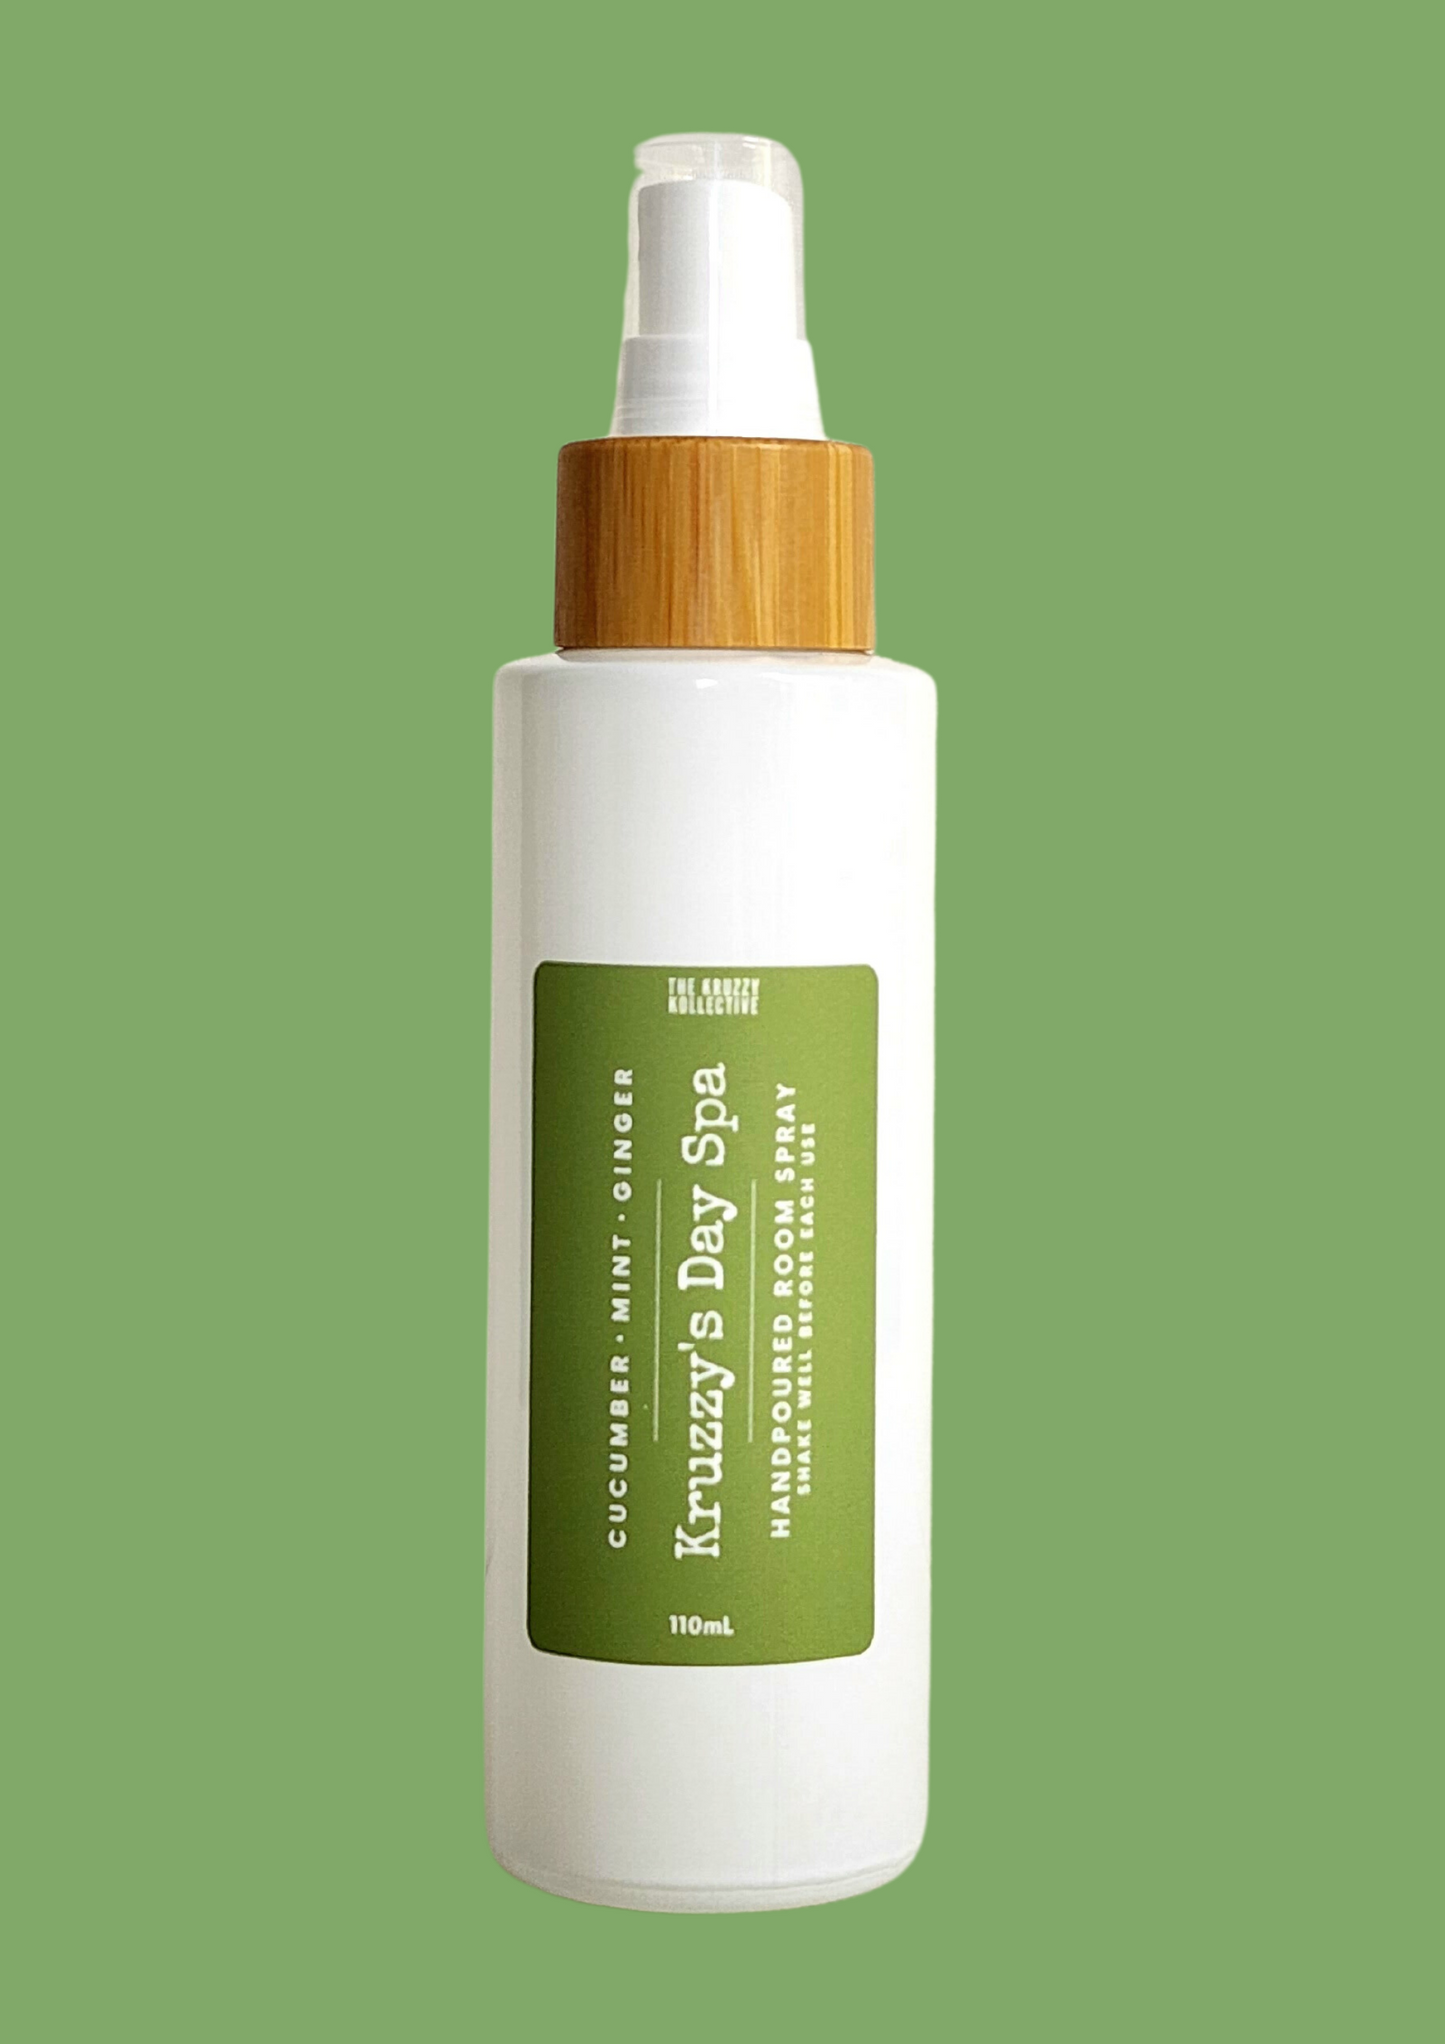 home fragrance spray odor eliminators eco friendly room freshener air freshener cucumber mint ginger